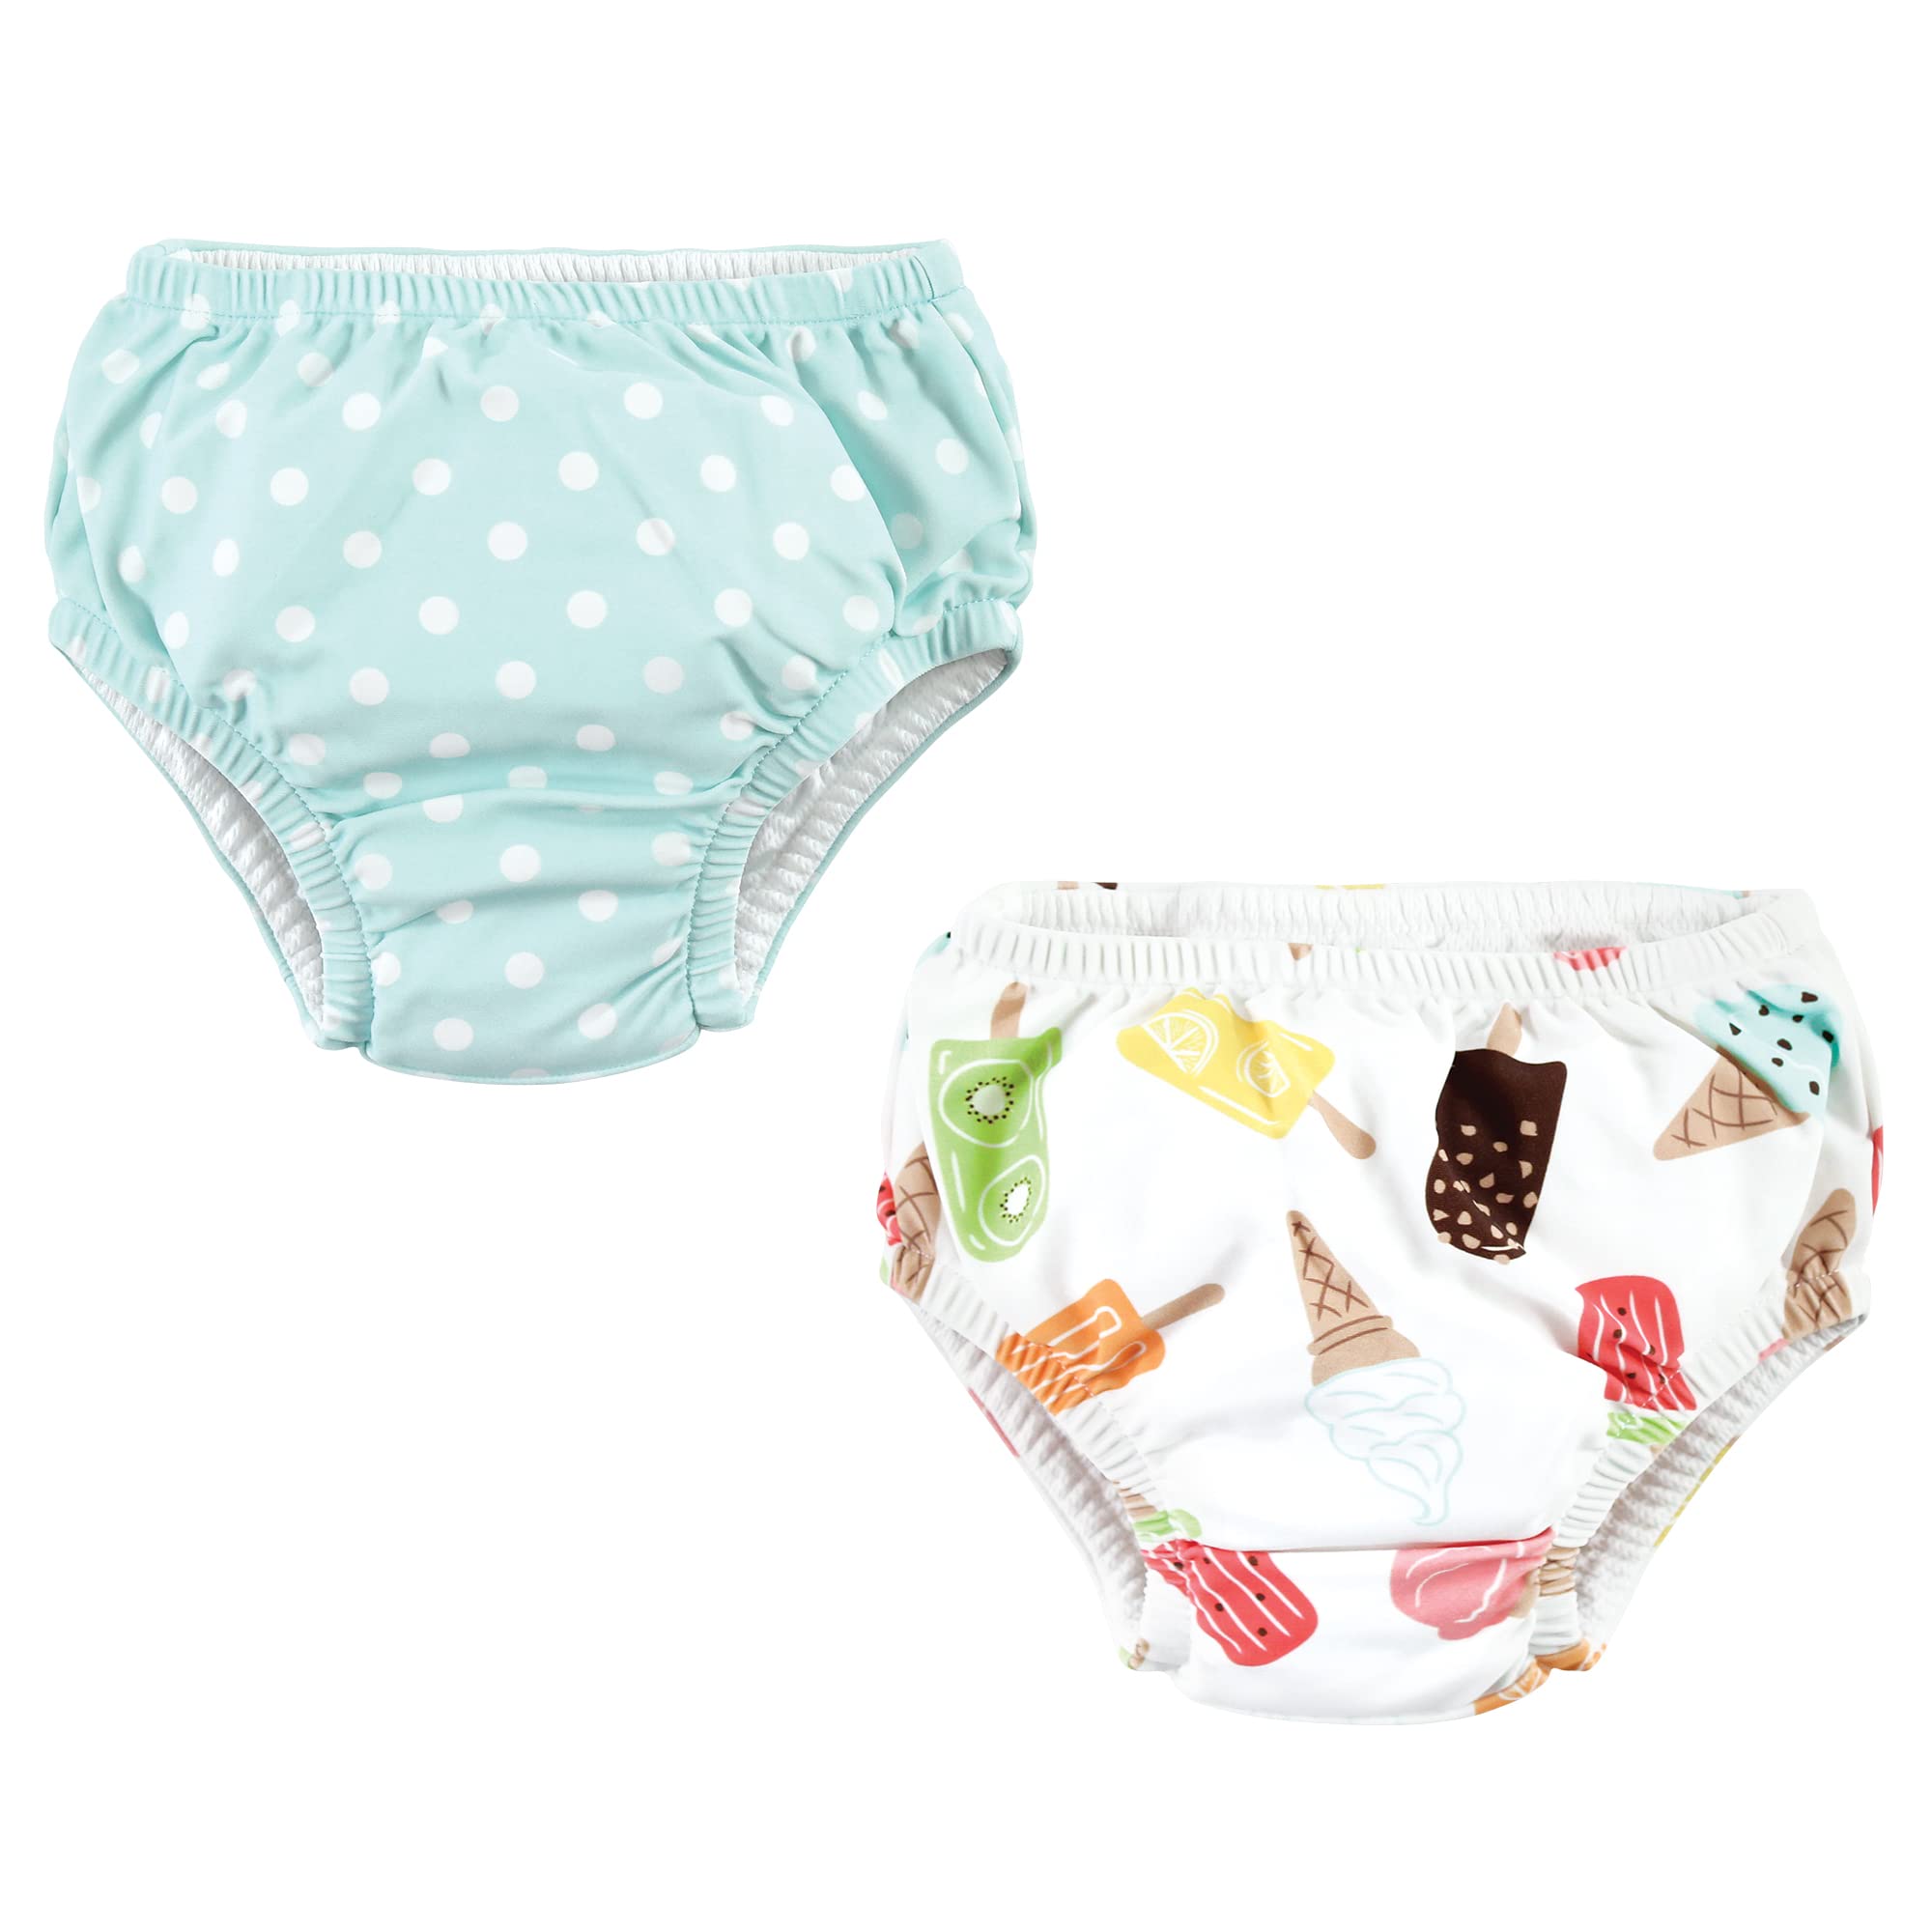 Hudson Baby Unisex Baby Swim Diapers, Ice Cream, 3 Toddler